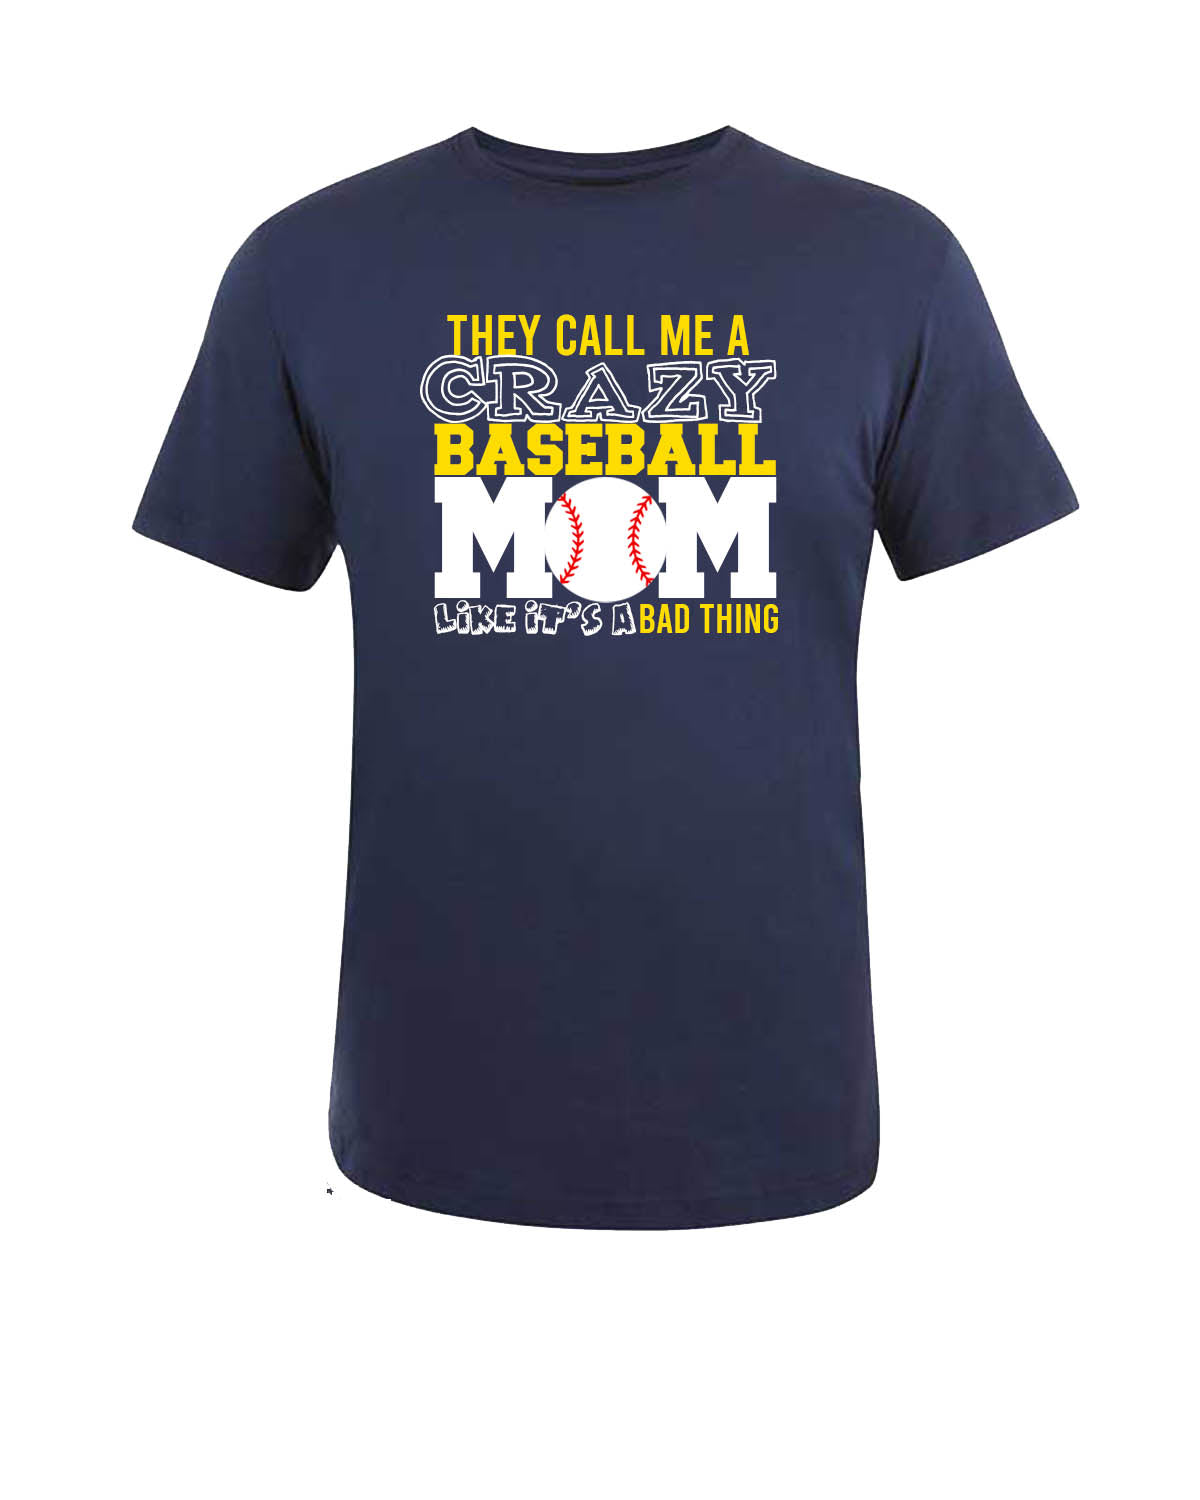 Crazy Baseball Mom t-shirt